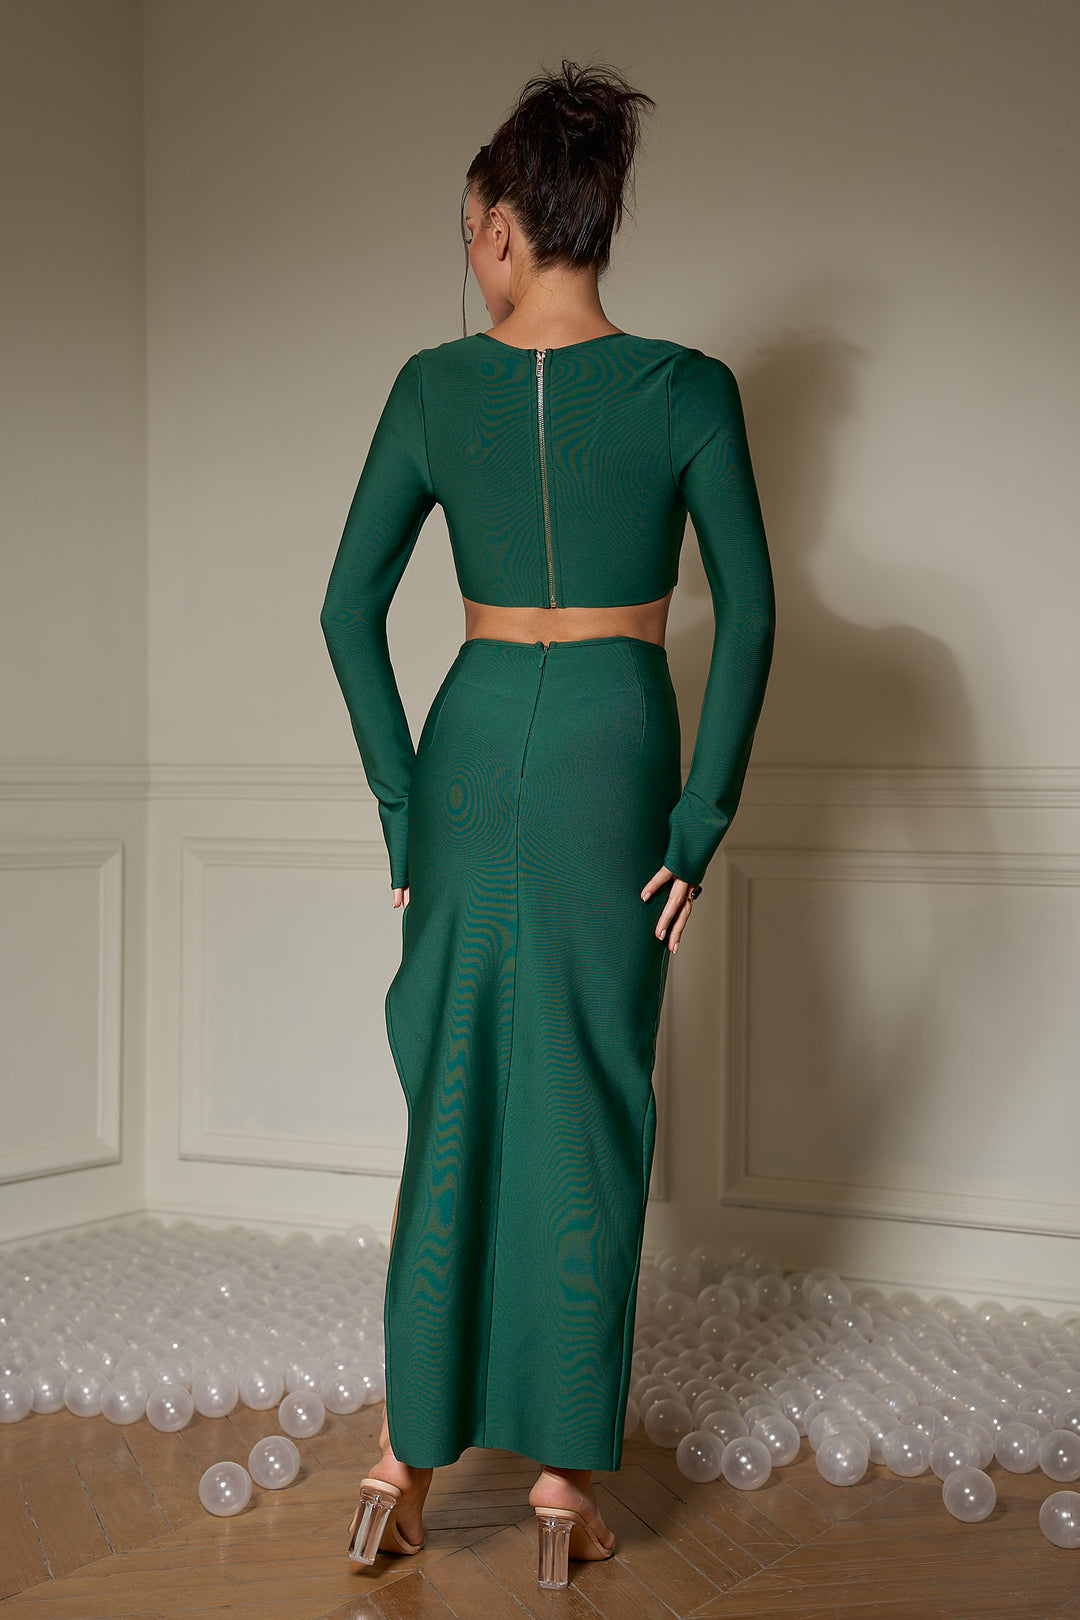 Sesidy Bertha Emerald Two-Piece Slit Dress in S